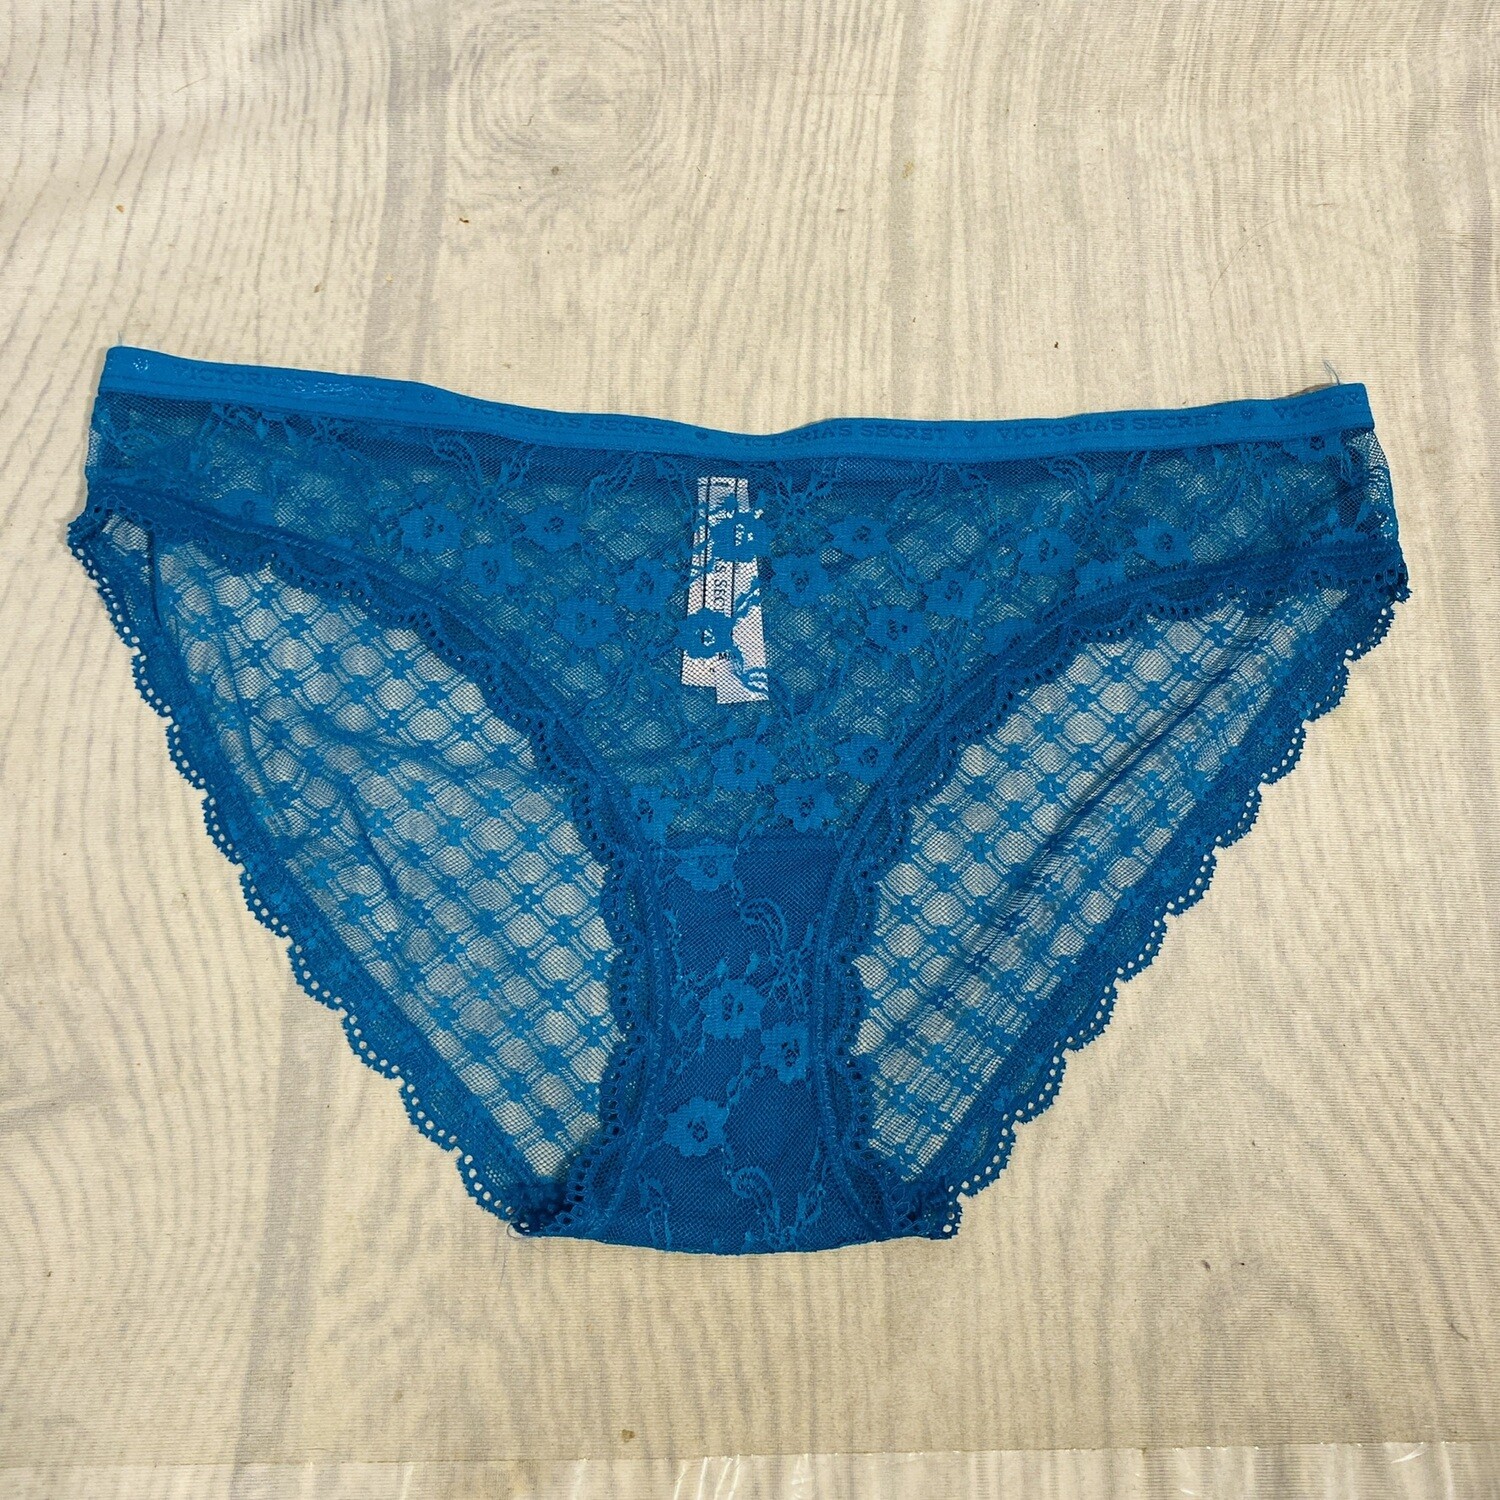 Size Medium Victoria’s Secret Lace Bikini Blue